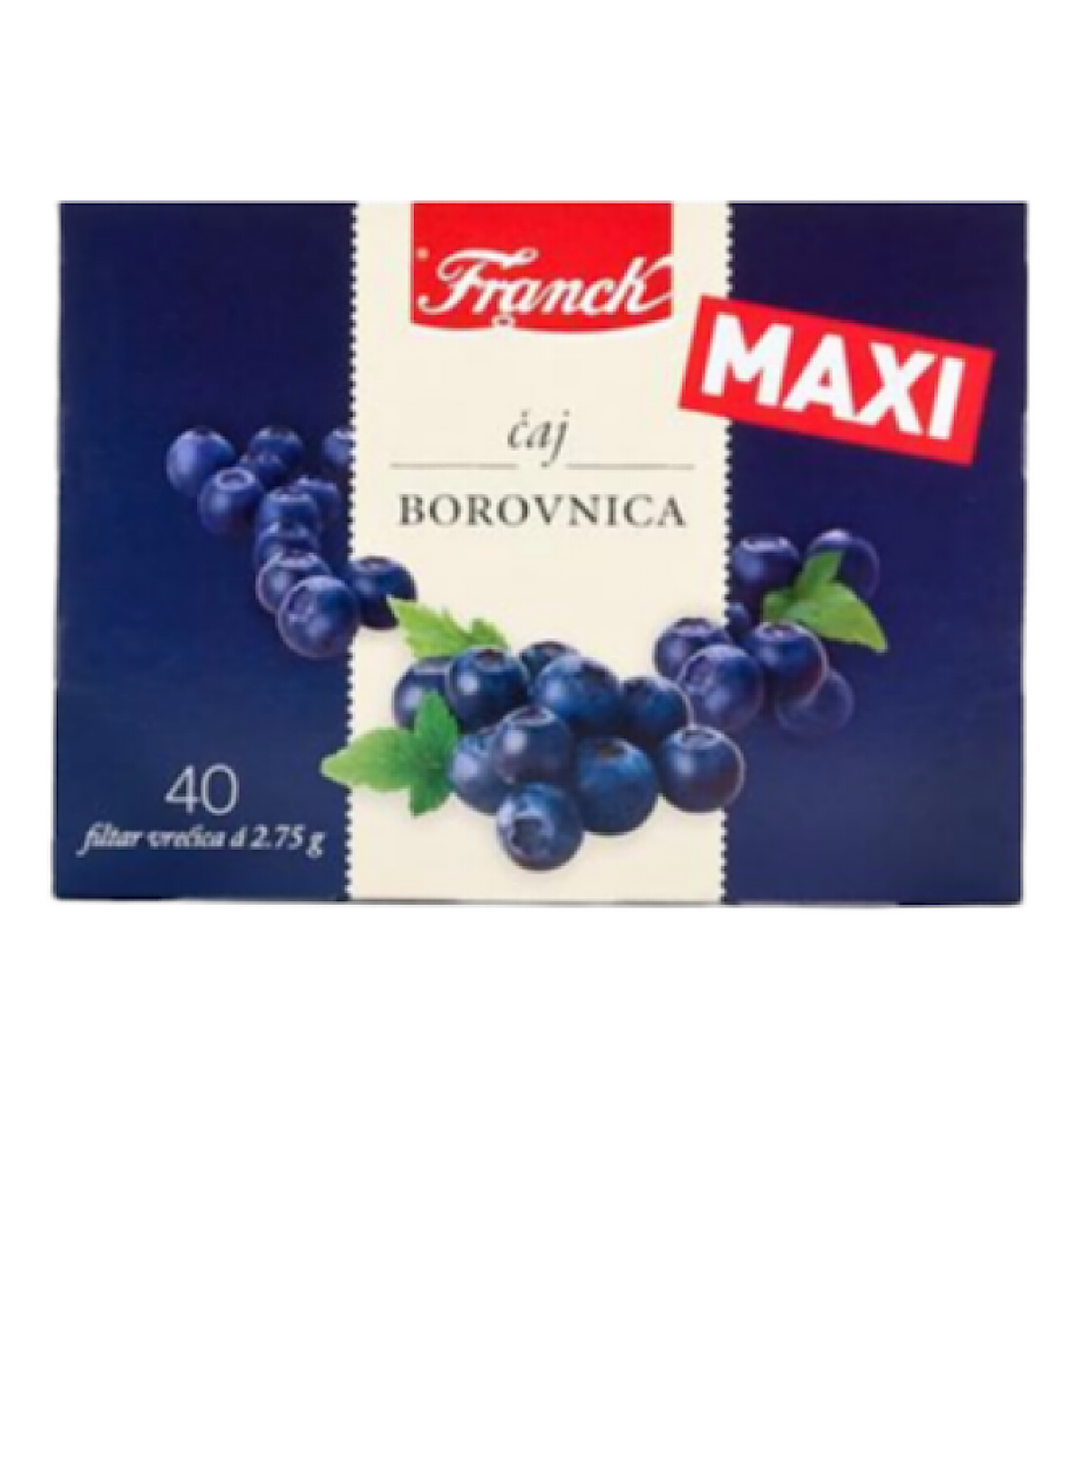 Blueberry Tea Borovnica - Franck - 40 Tea bags